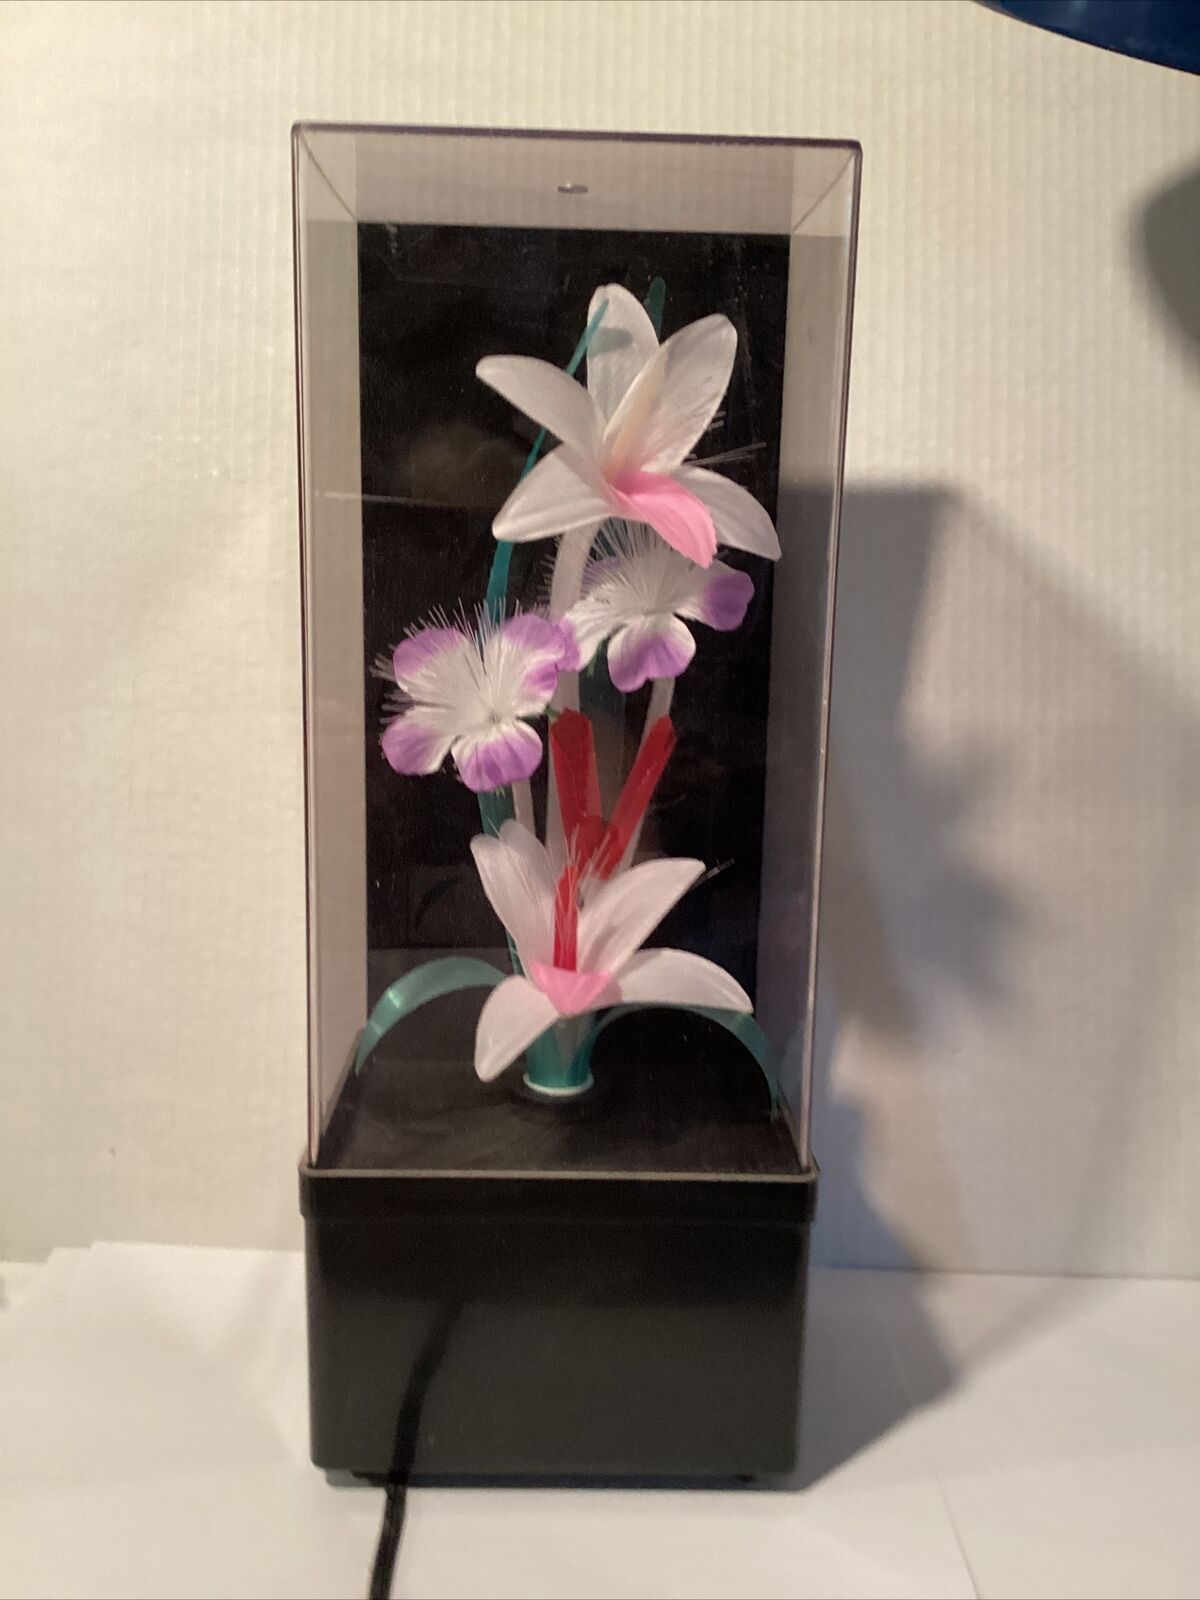 Vintage Fiber Optic Color Changing Flowers Light Music Box 80s Decor Tested